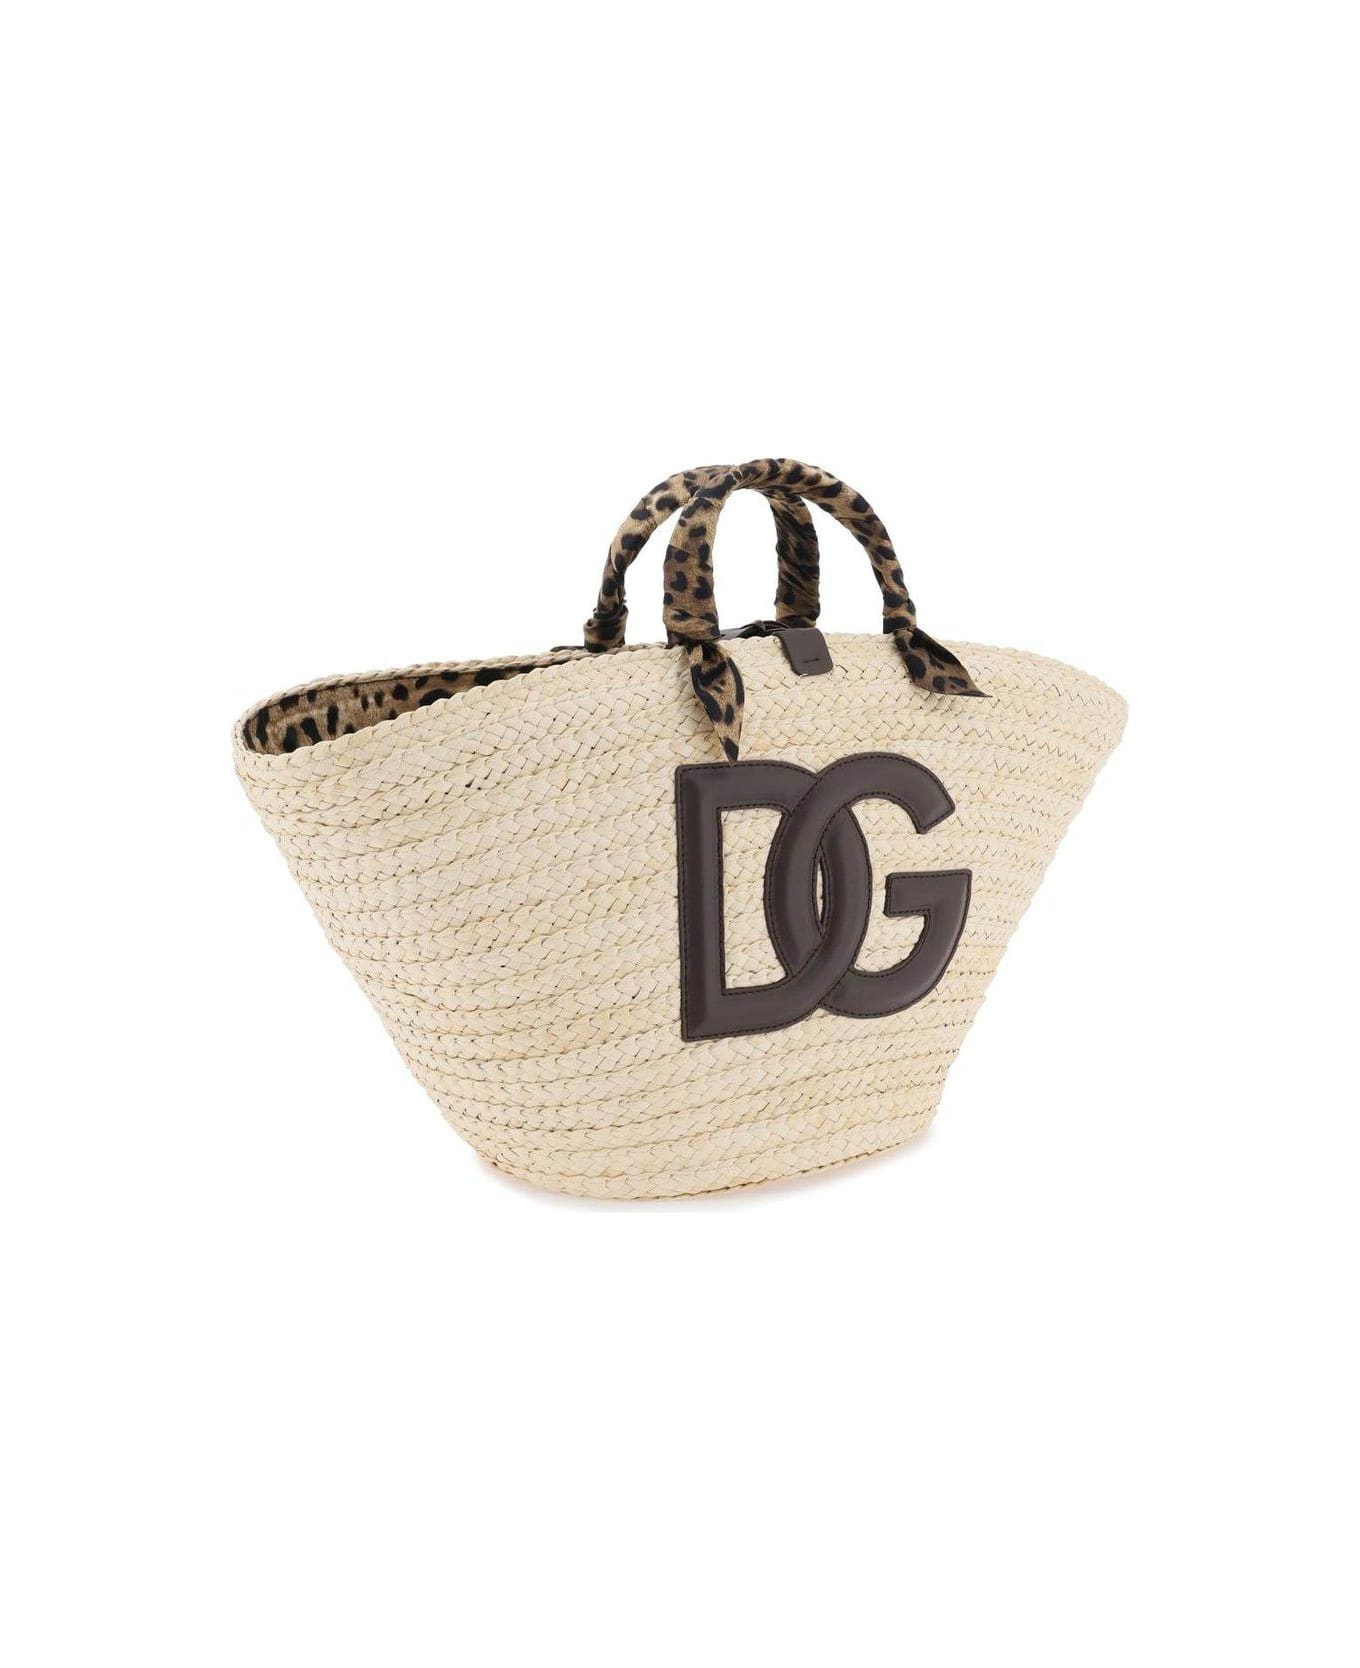 Dolce & Gabbana Kendra Medium Bag - MULTICOLOR